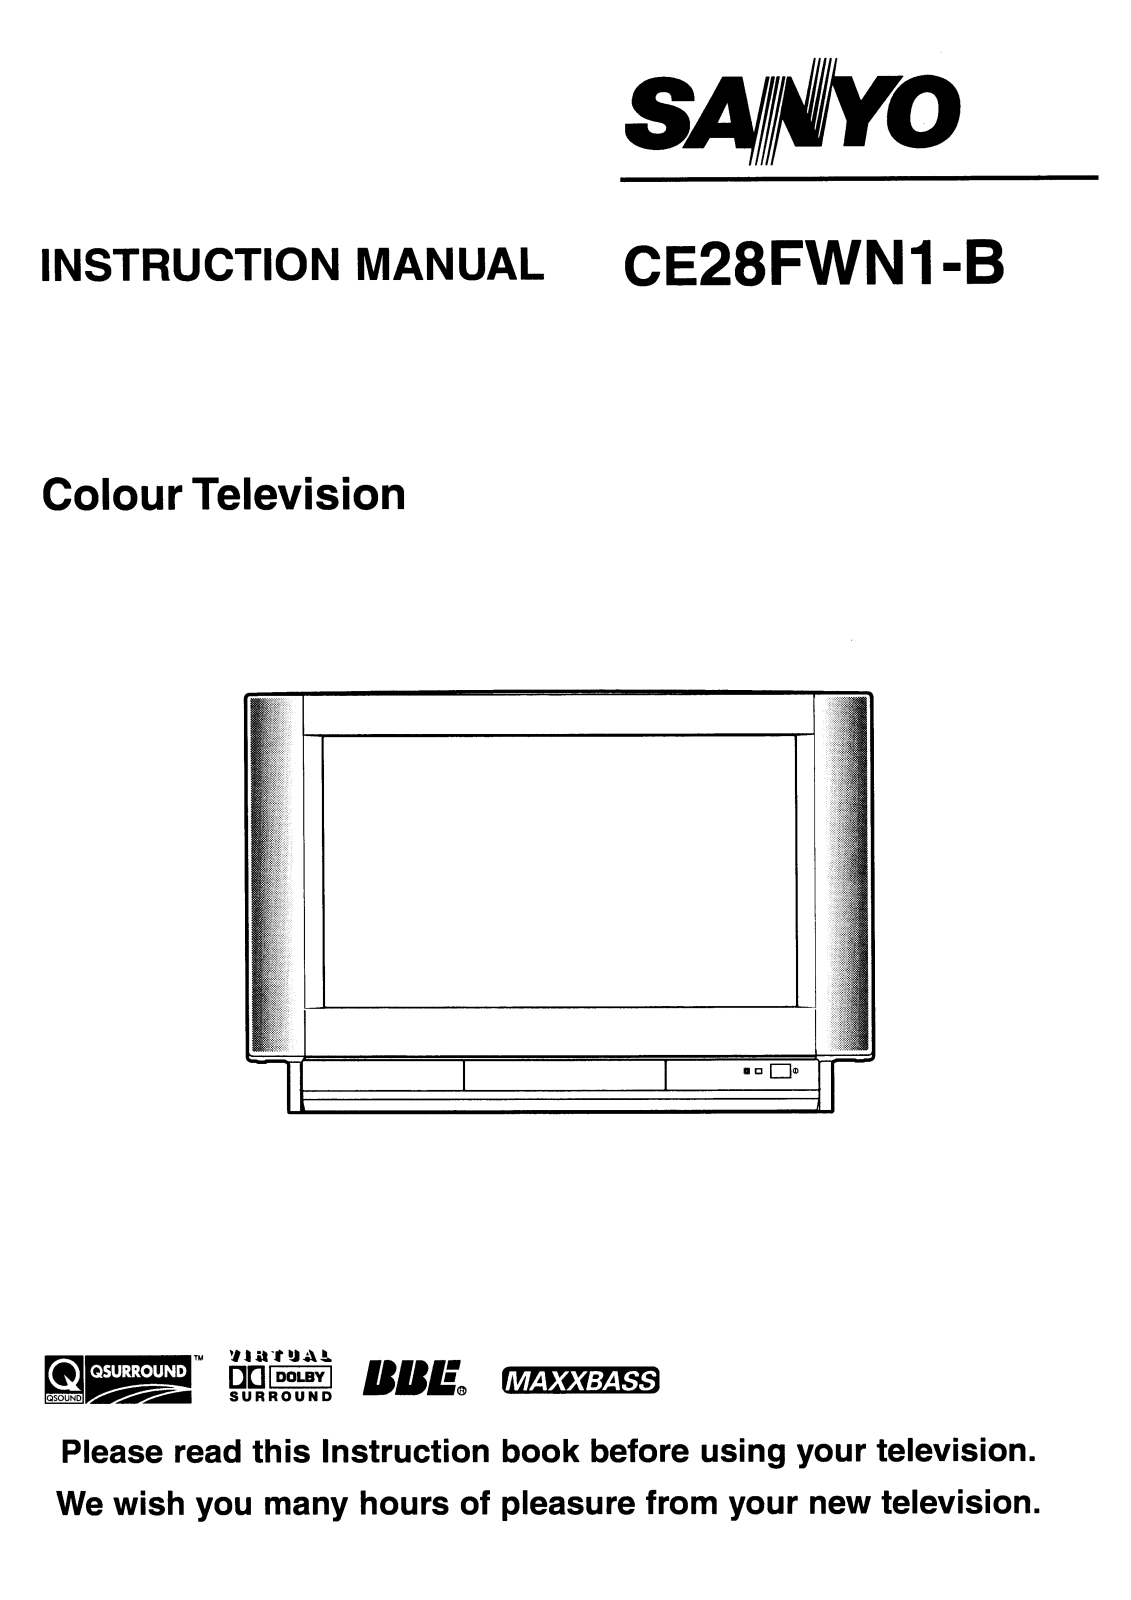 Sanyo CE28FWN1-B, CE32FWN1-B Instruction Manual